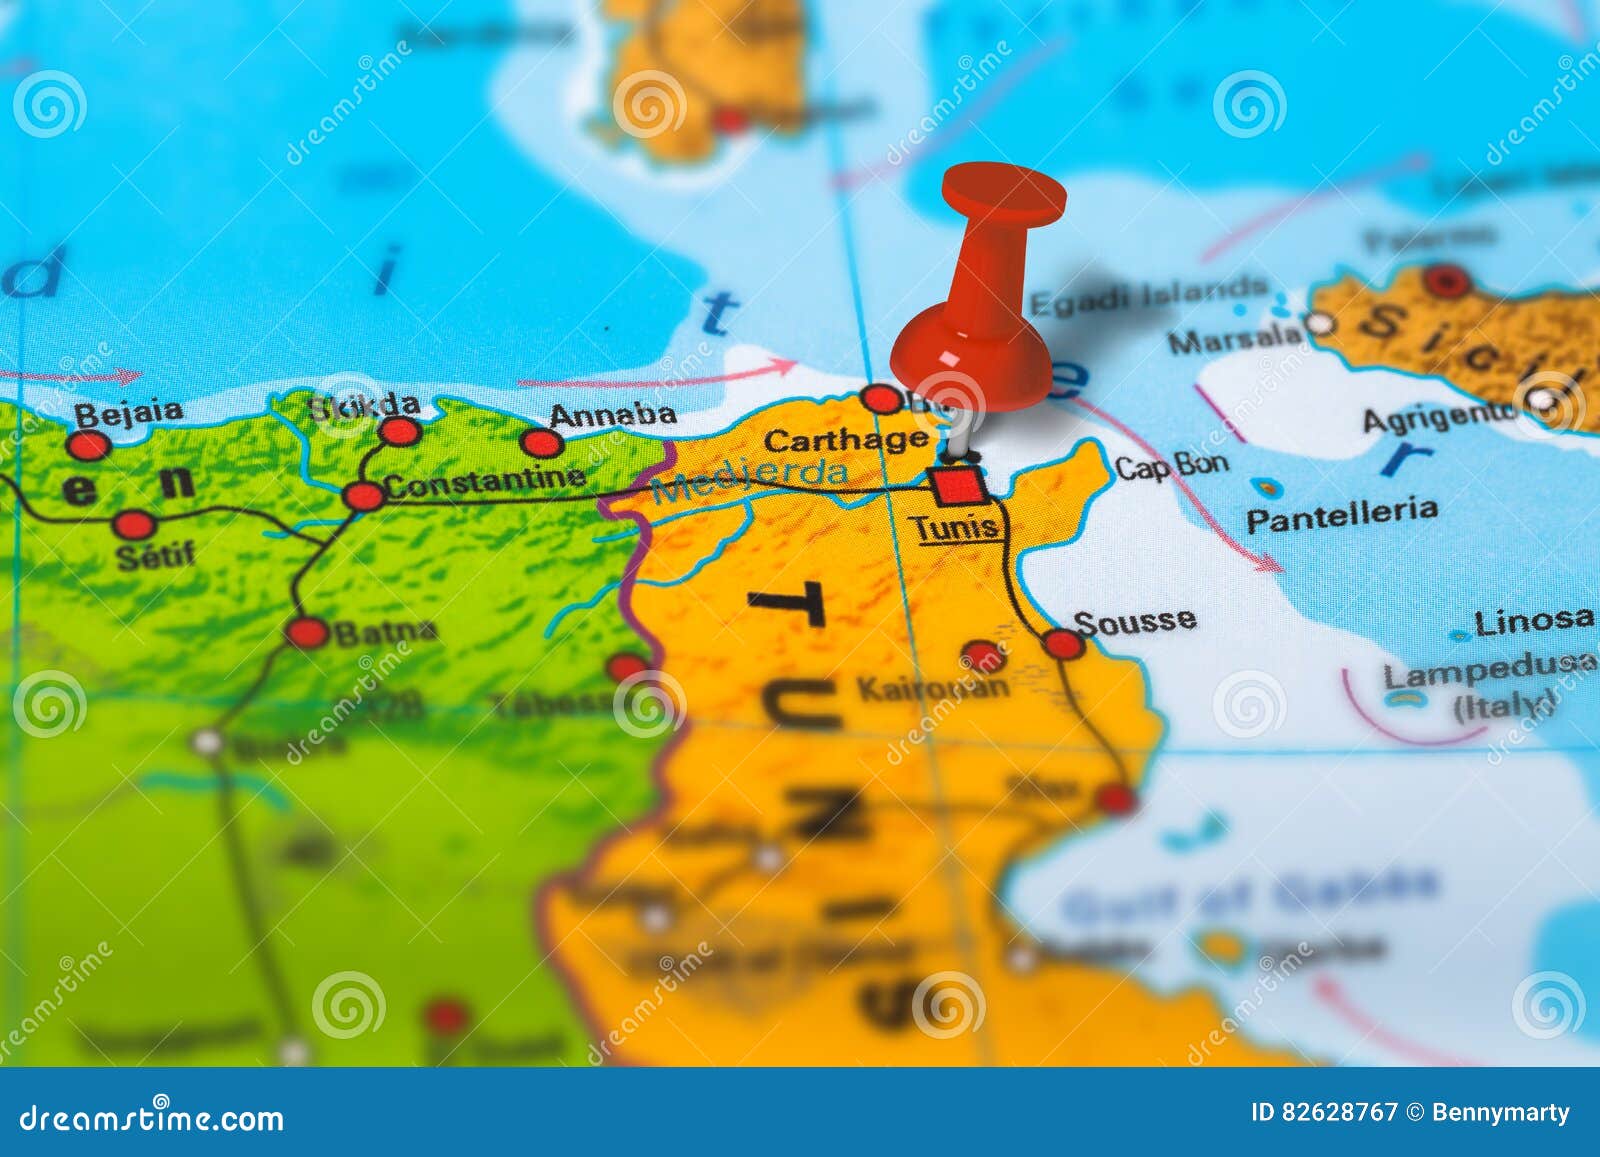 В какой стране находился карфаген. Карфаген на карте Туниса. Рельеф Туниса. Картаж Тунис. Карфаген на карте Африки.